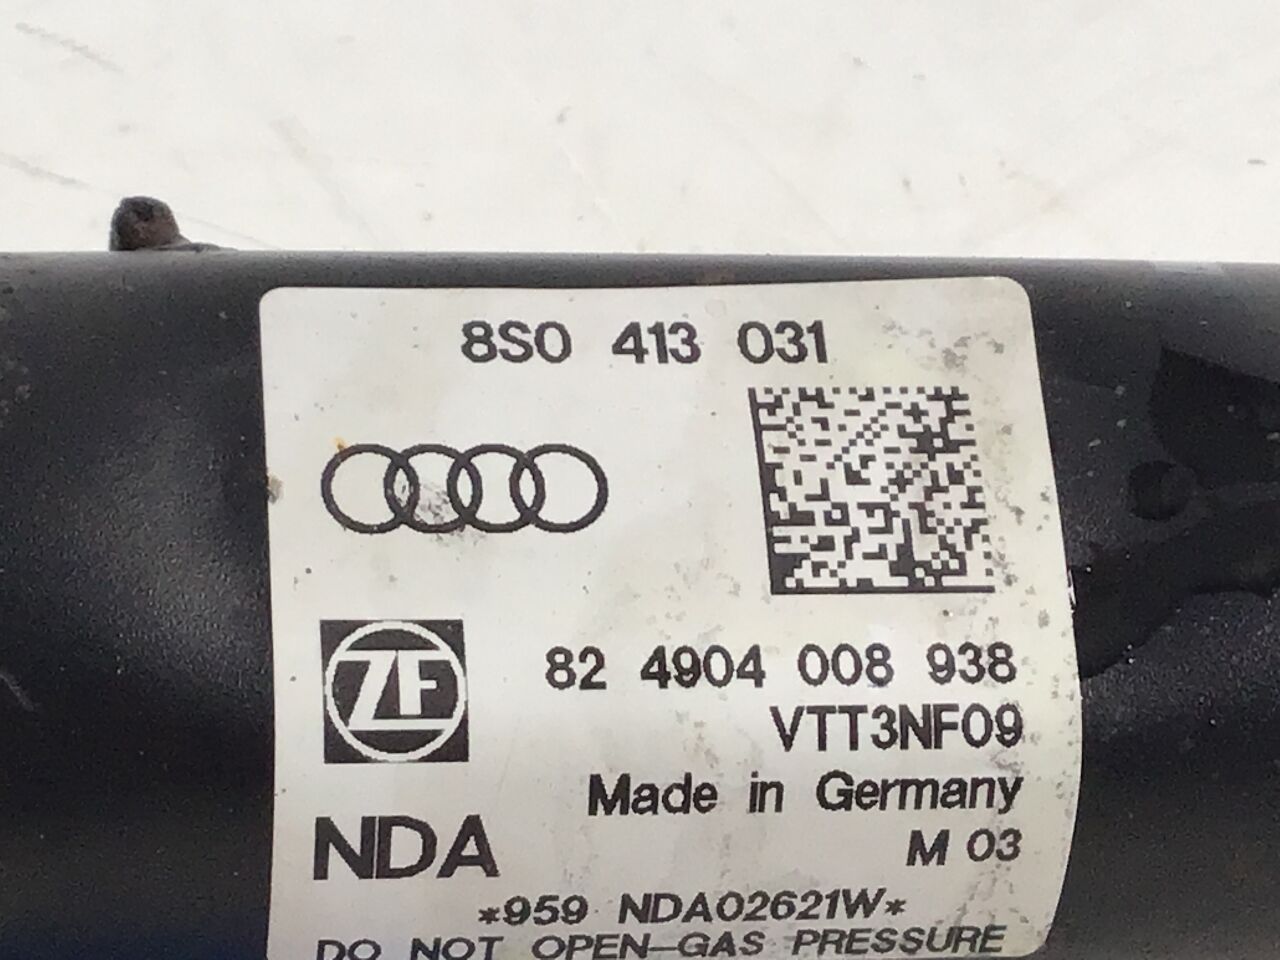 Abdeckung AUDI TT (8S) 2.0 TDI 135 kW 184 PS (07.2014-> )